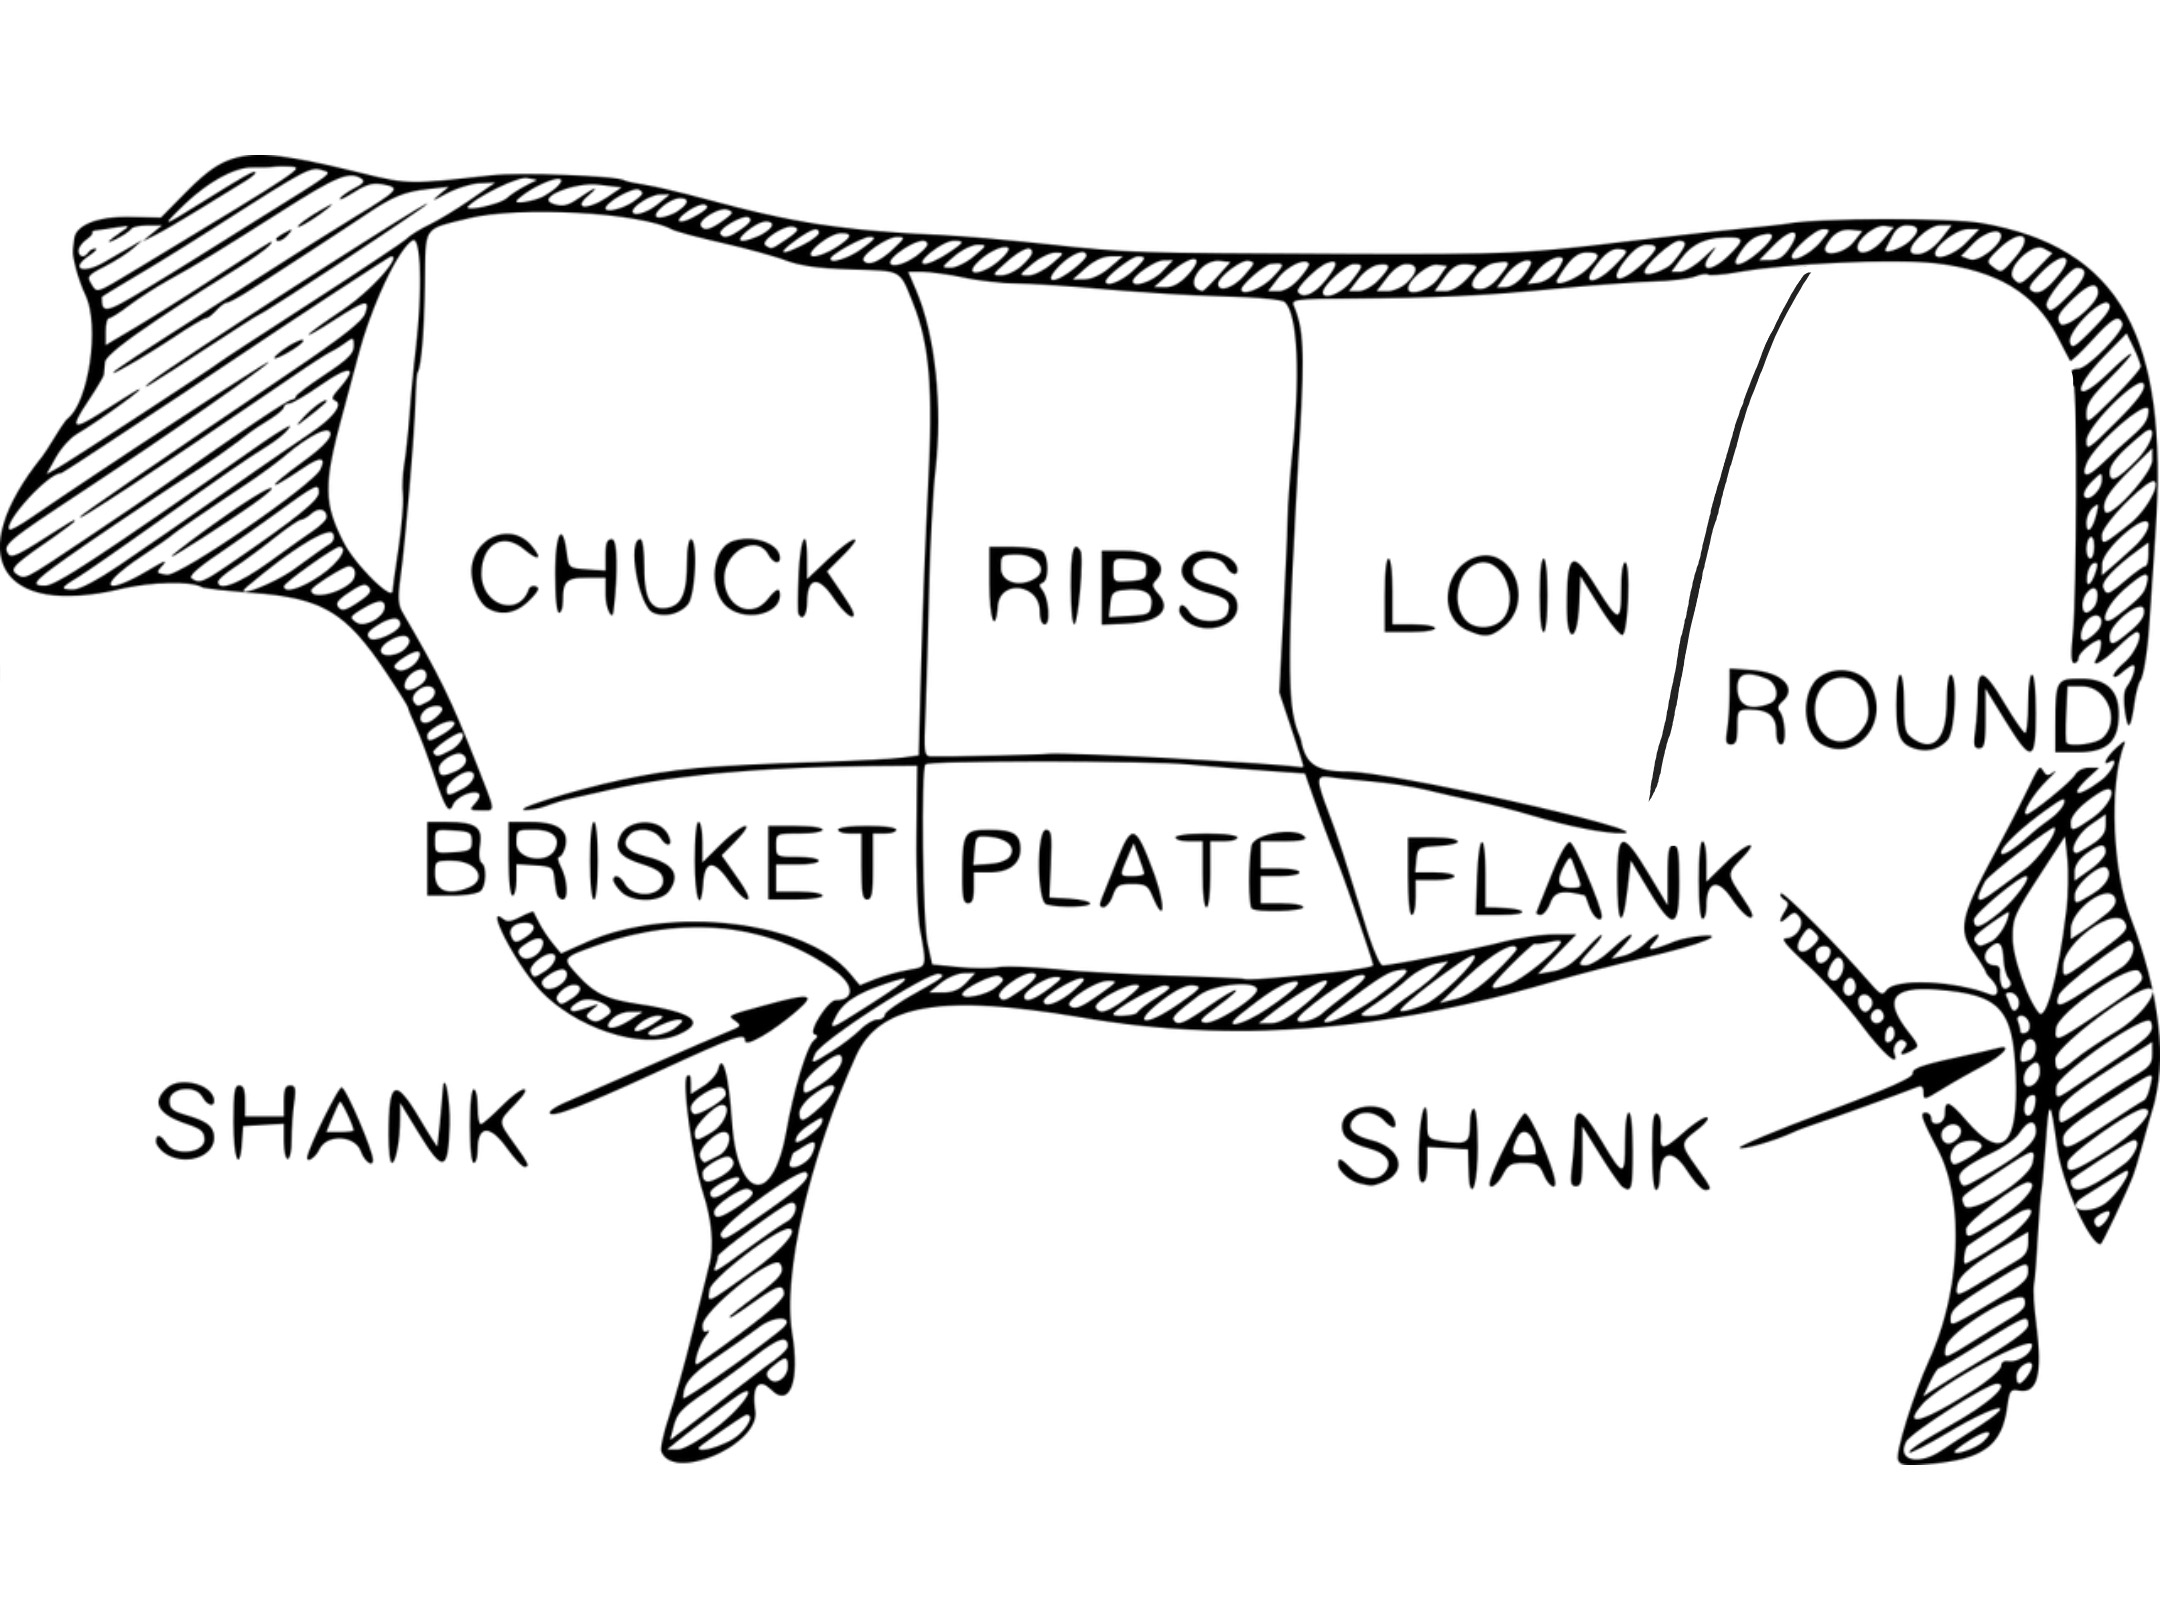 Understanding Primal Cuts and American Beef Grading